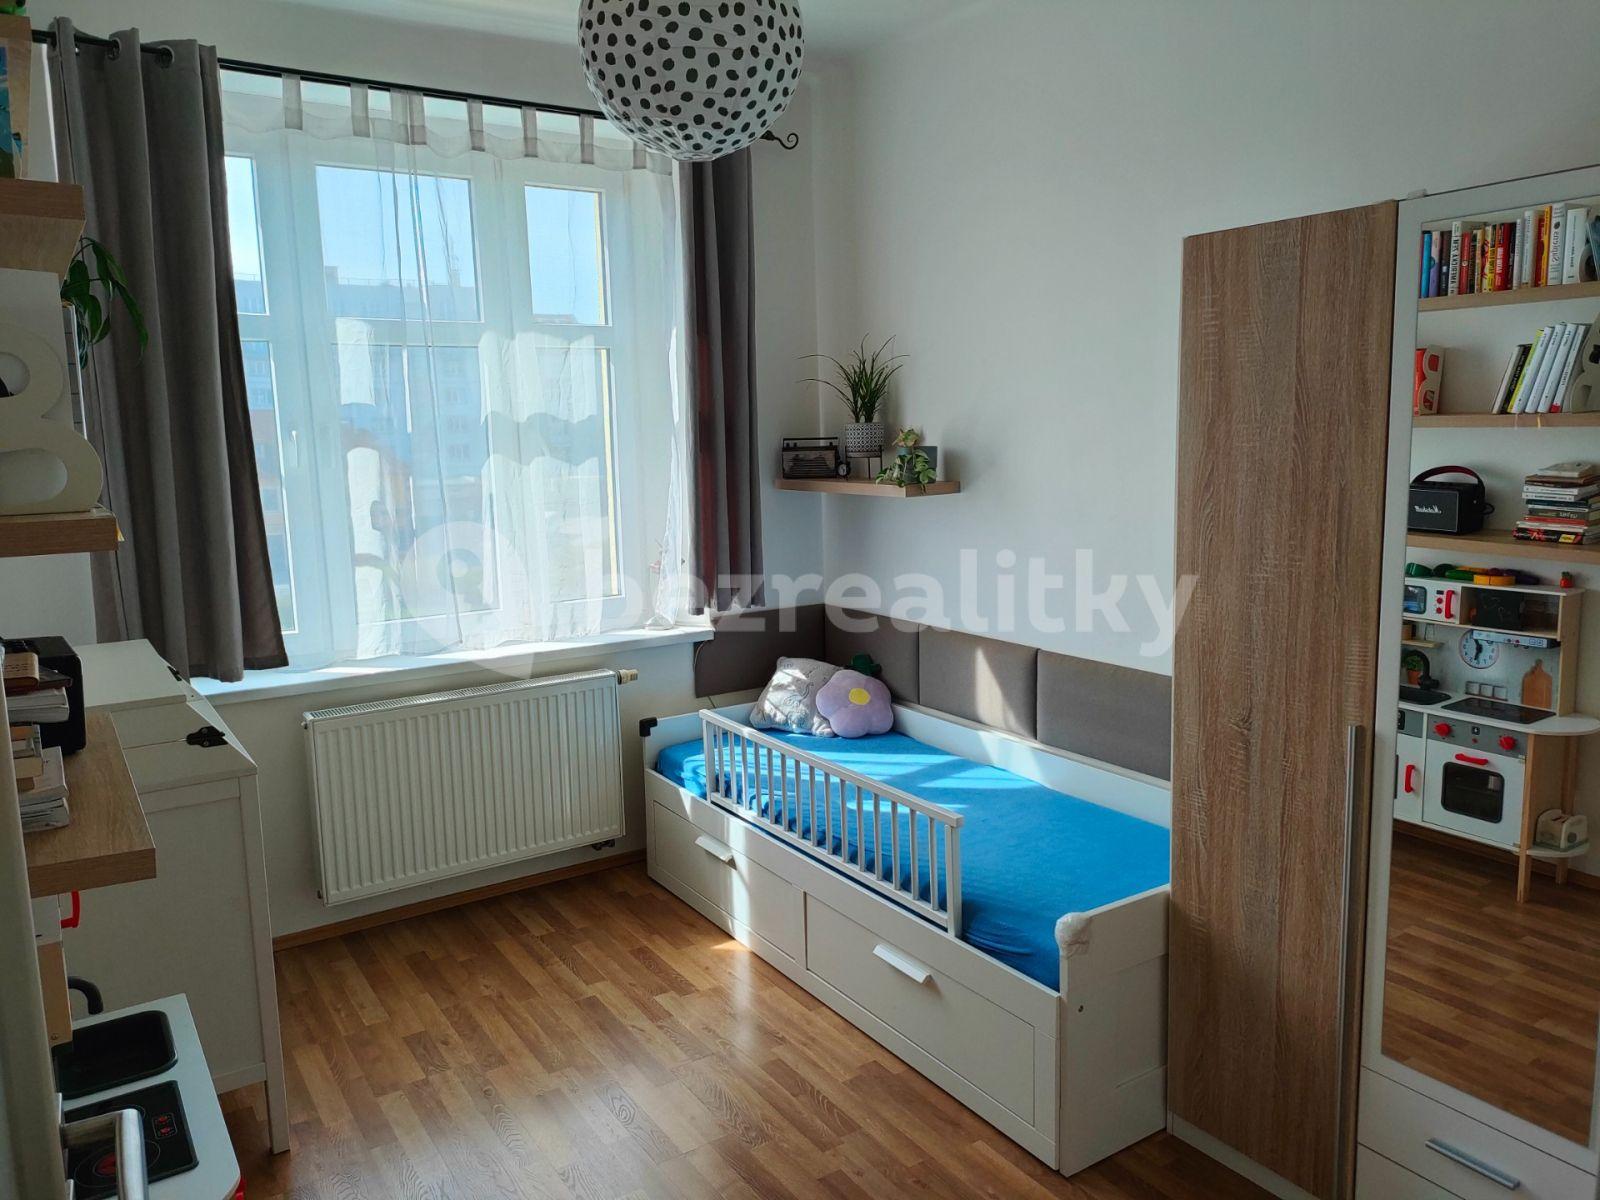 2 bedroom with open-plan kitchen flat for sale, 65 m², Vosmíkových, Prague, Prague